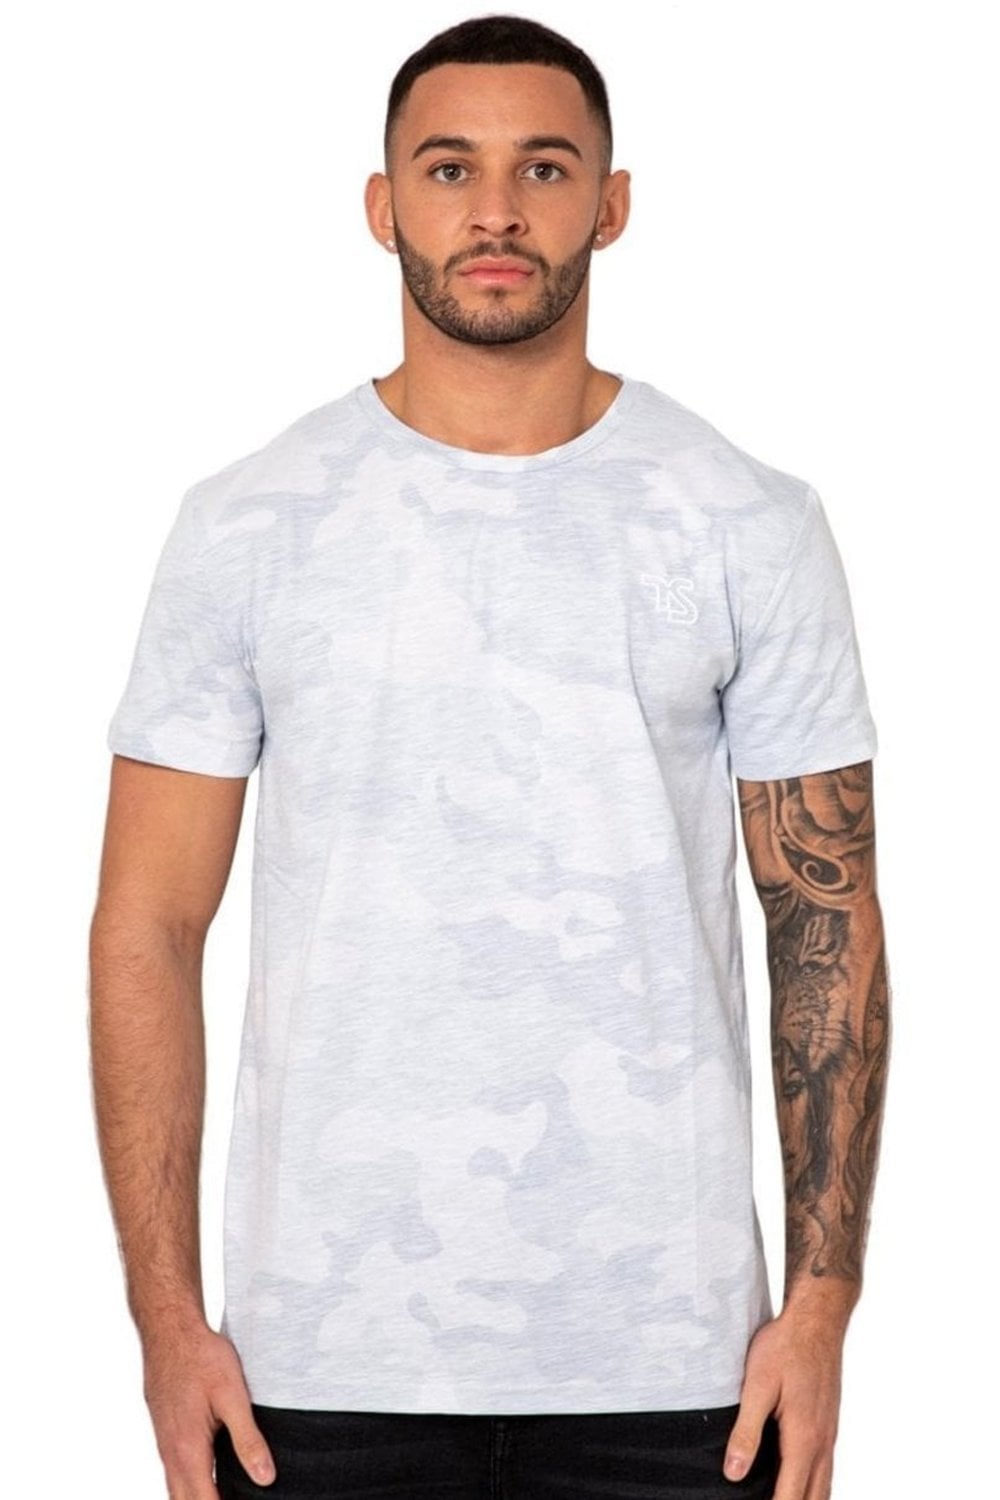 Lando T-Shirt - Twisted Soul | Men's Clothing